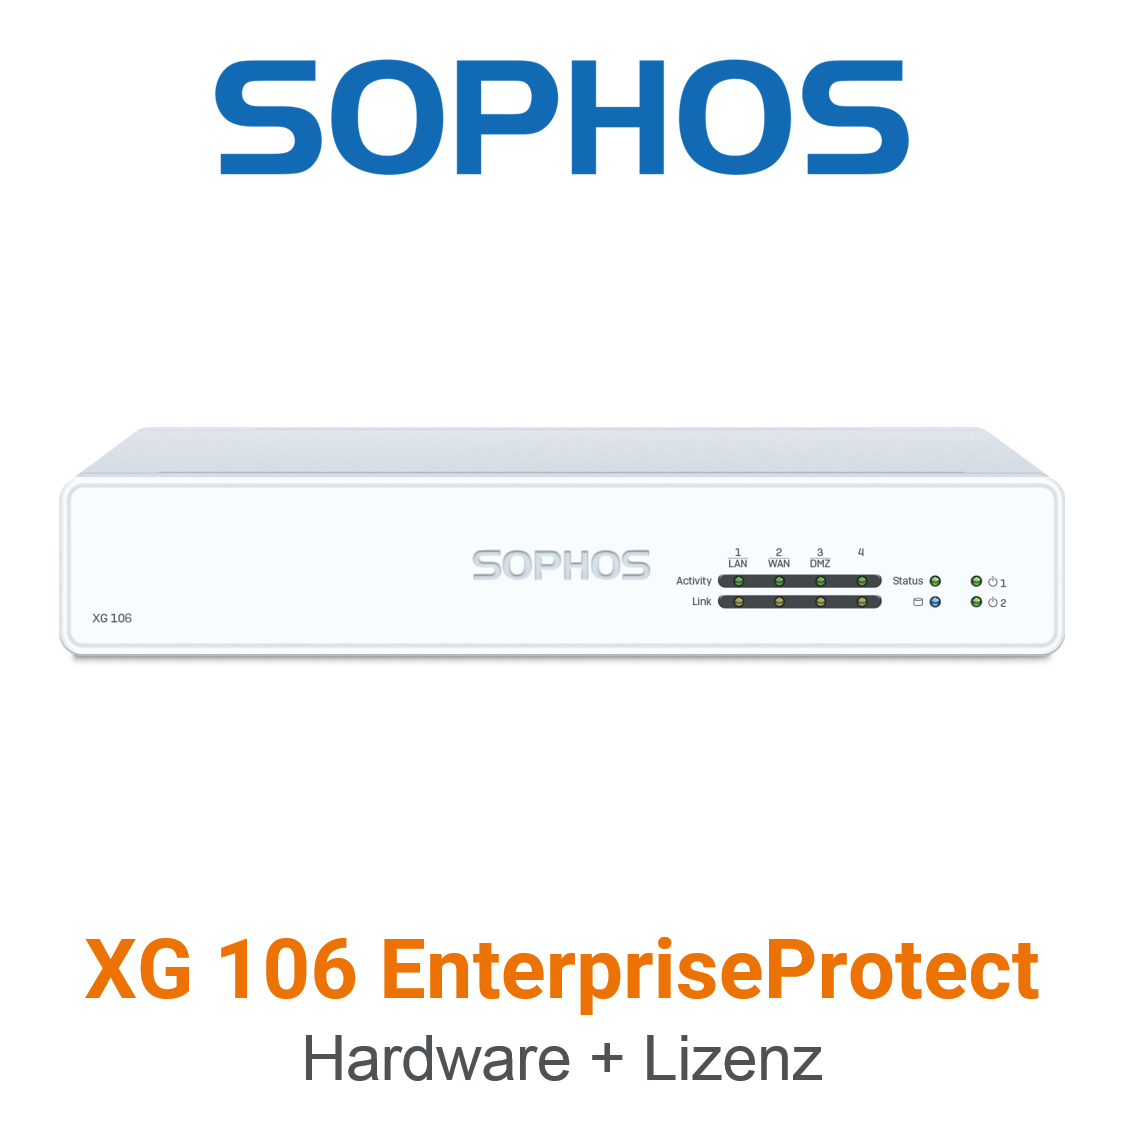 Sophos XG 106 EnterpriseProtect Bundle (Hardware + Lizenz) (End of Sale/Life)